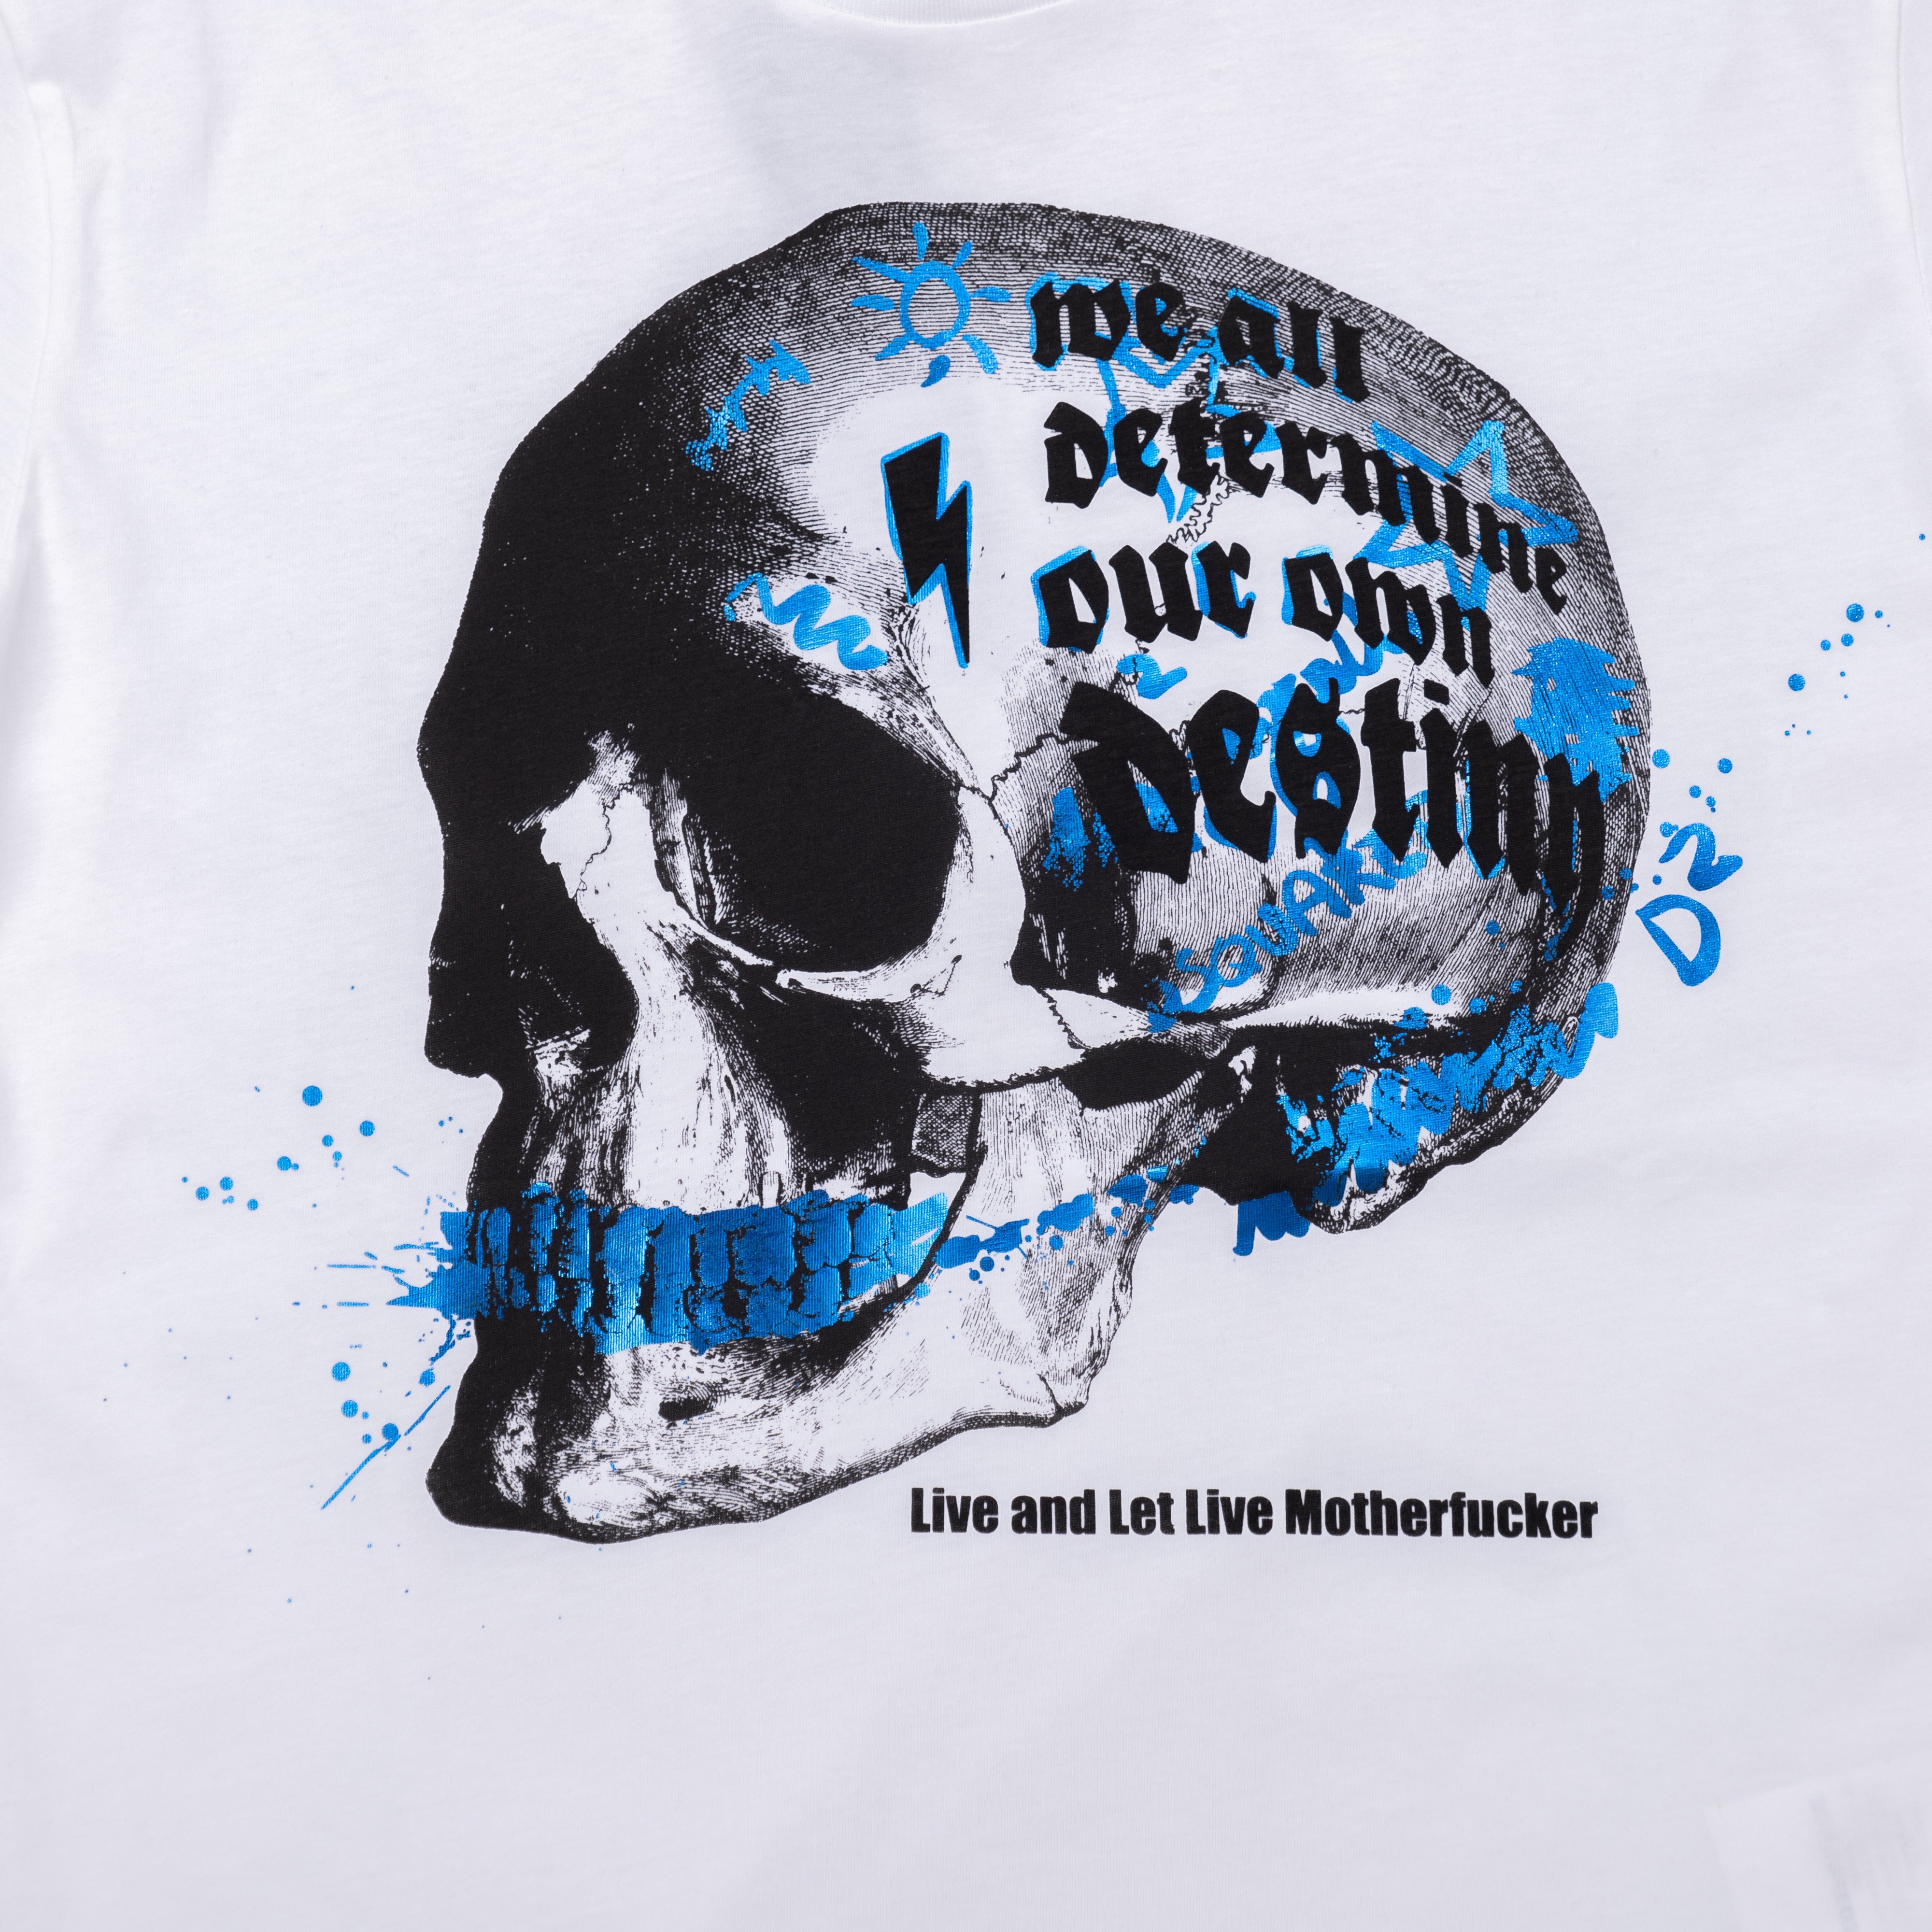 White Skull Graphic T-Shirt.